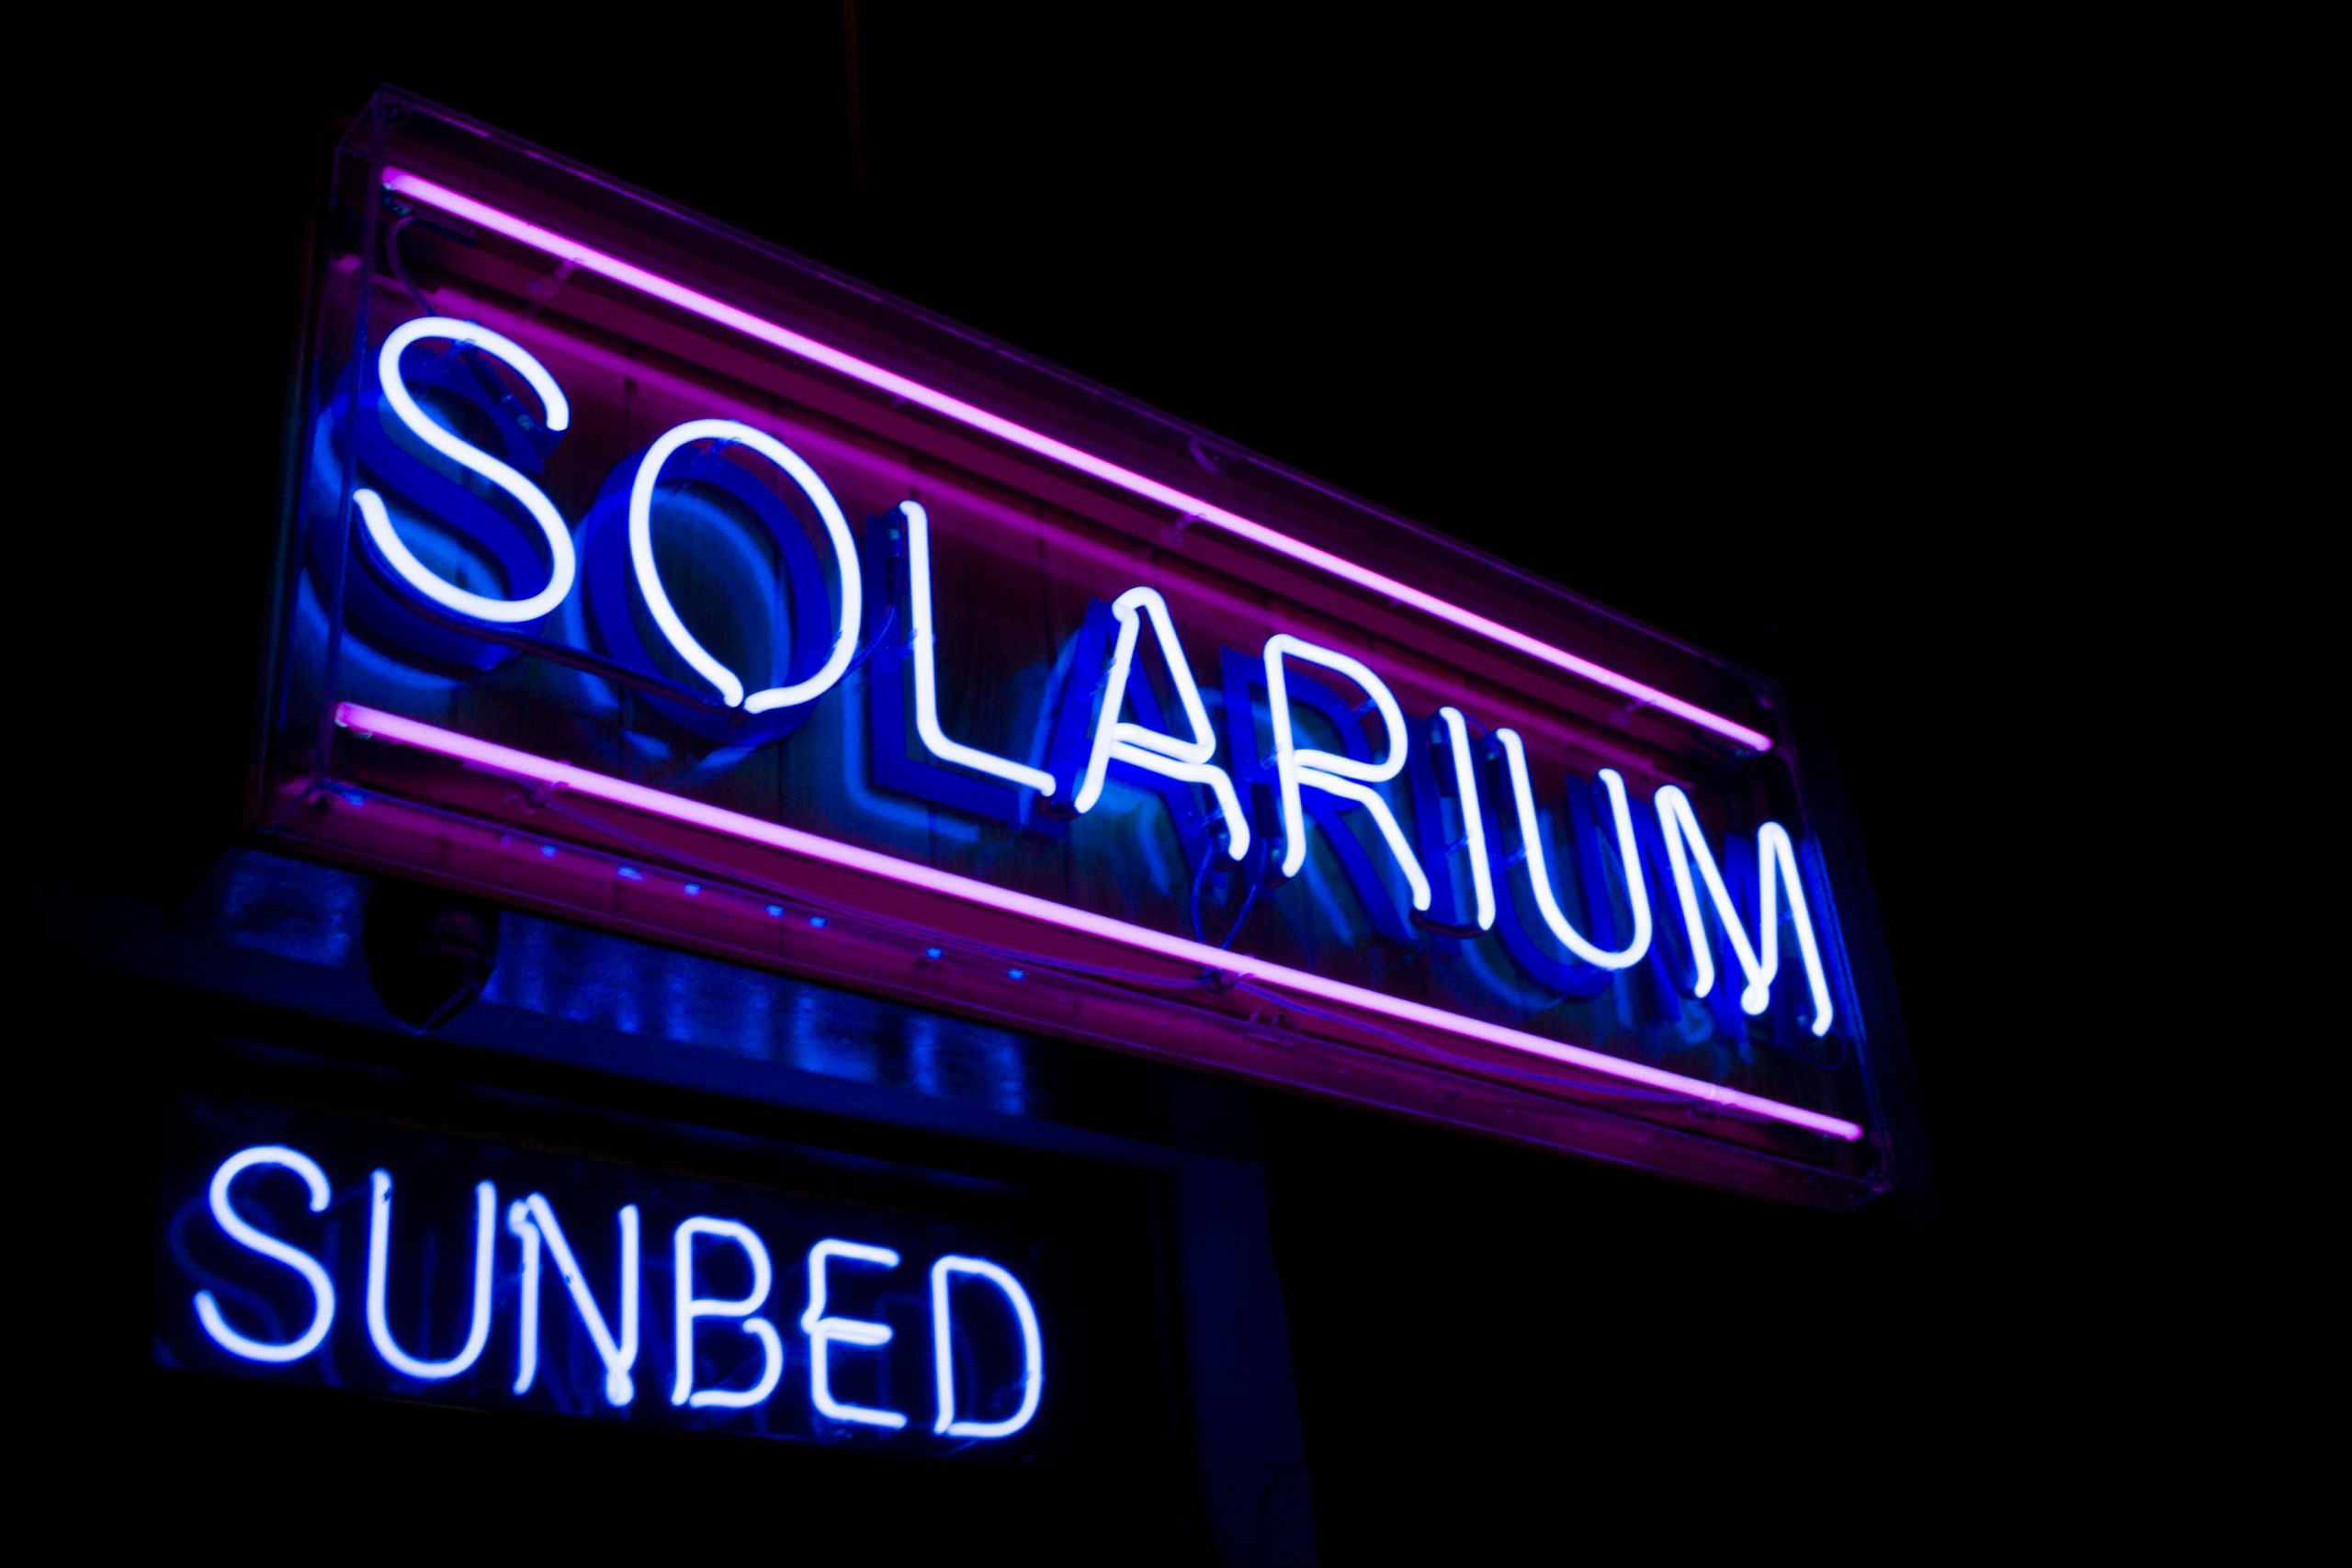 Neon signs saying 'solarium' and sunbed' Photo by samuel-mcgarrigle on Unsplash.com